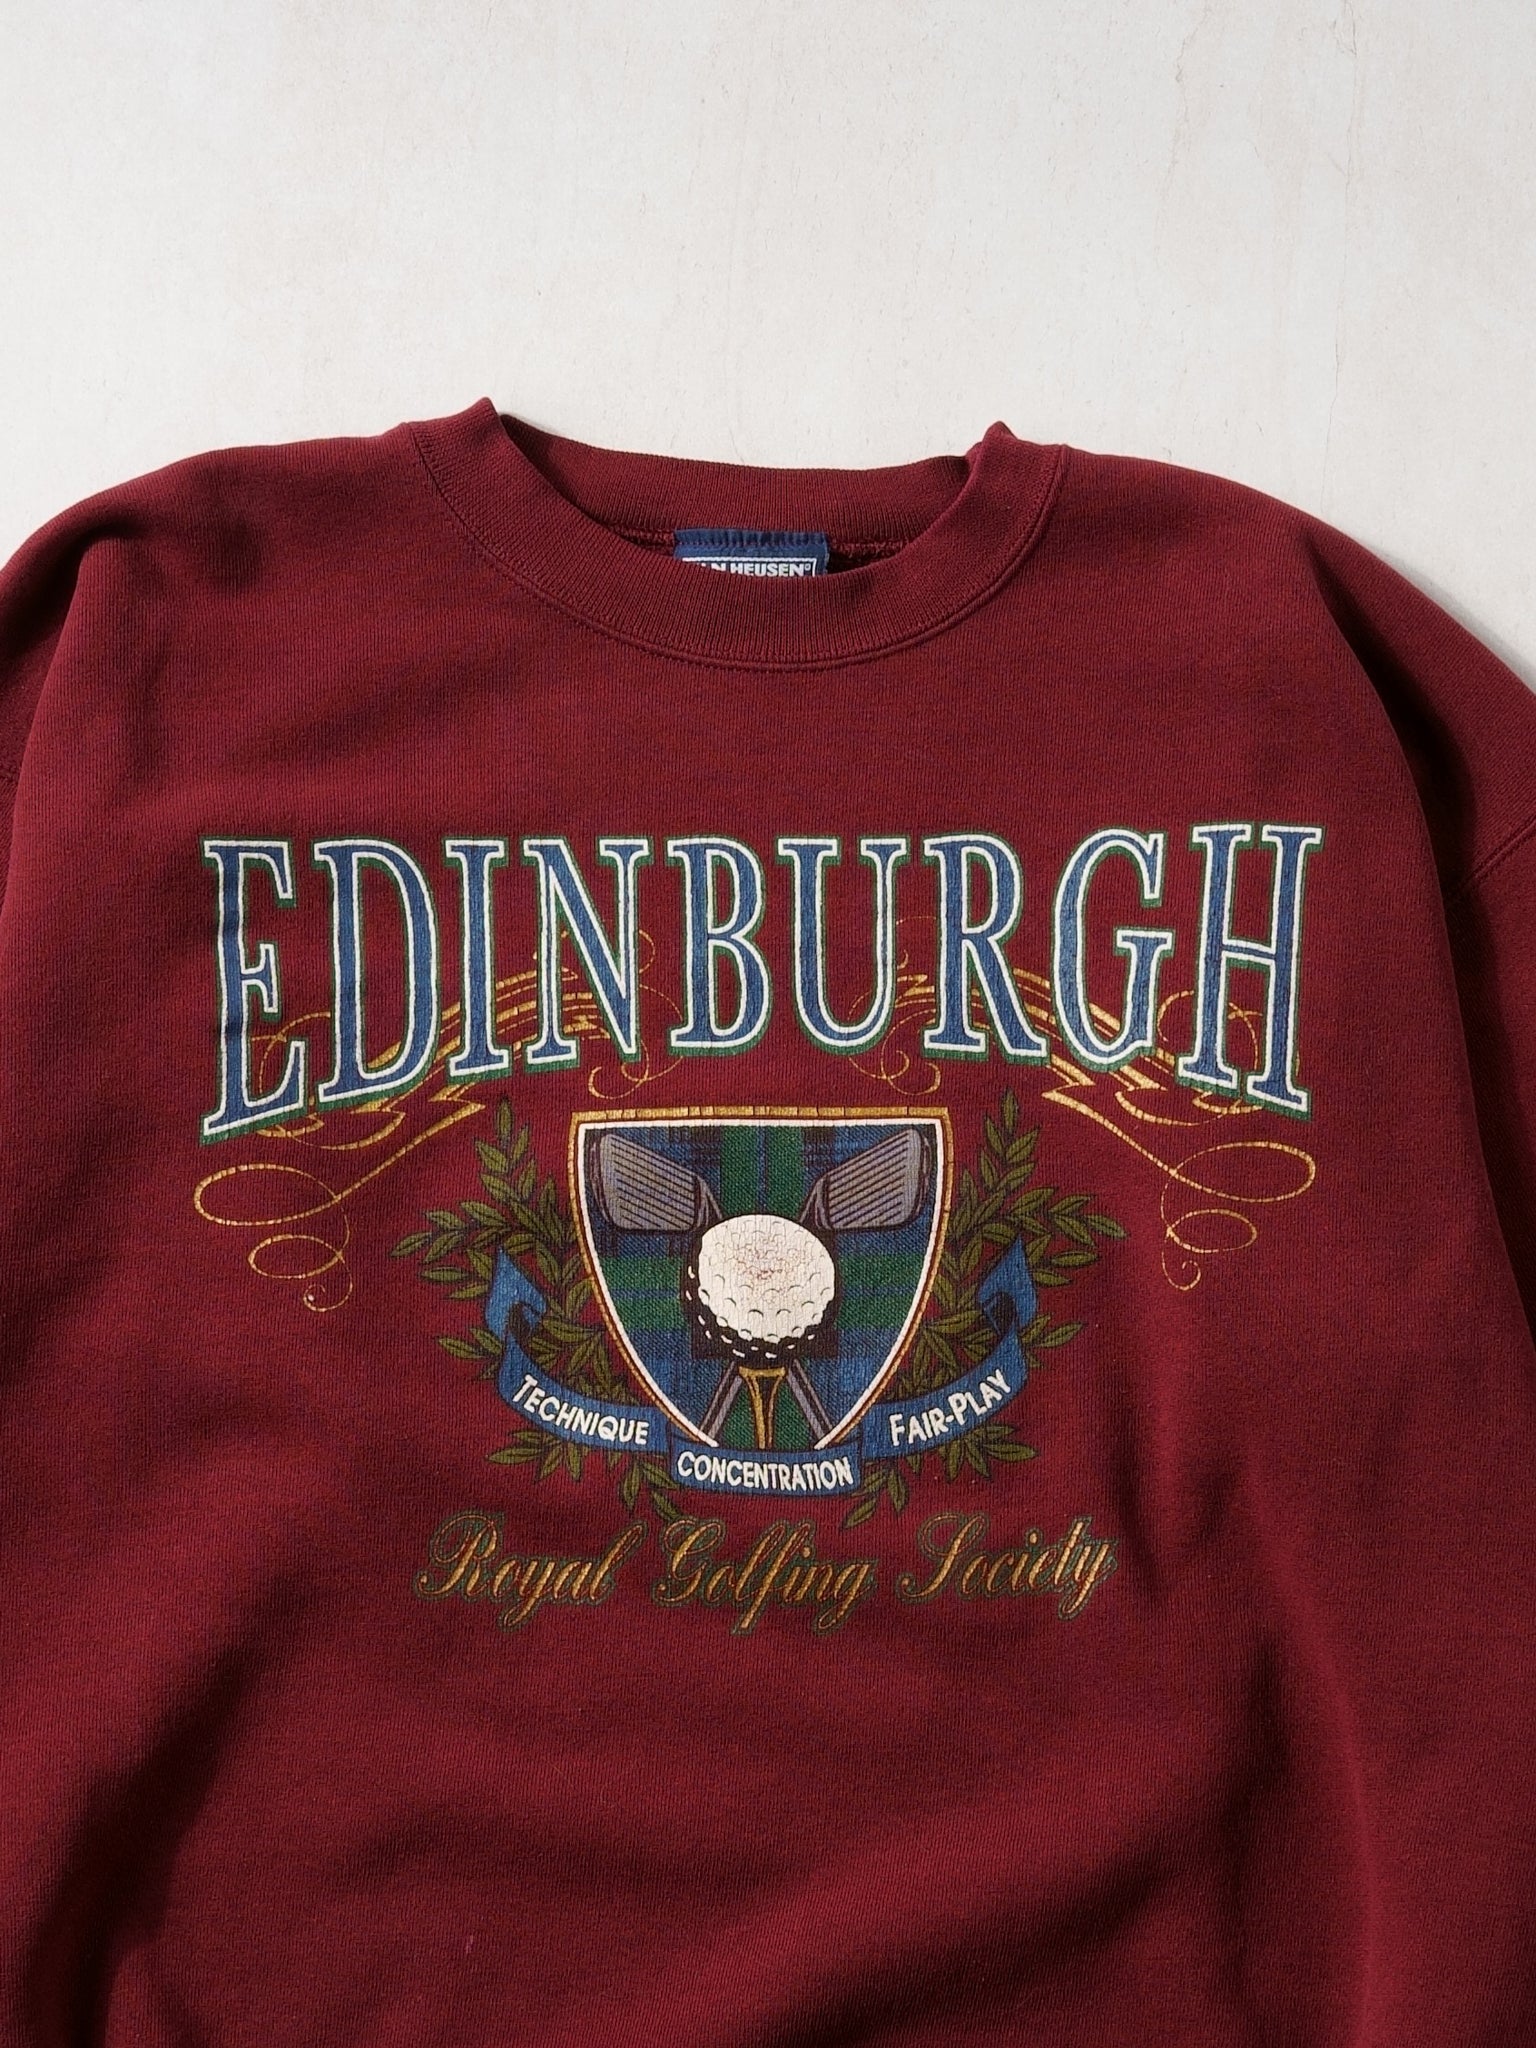 Vintage 90s Maroon Red Edinburgh Royal Golfing Society Crewneck (M)